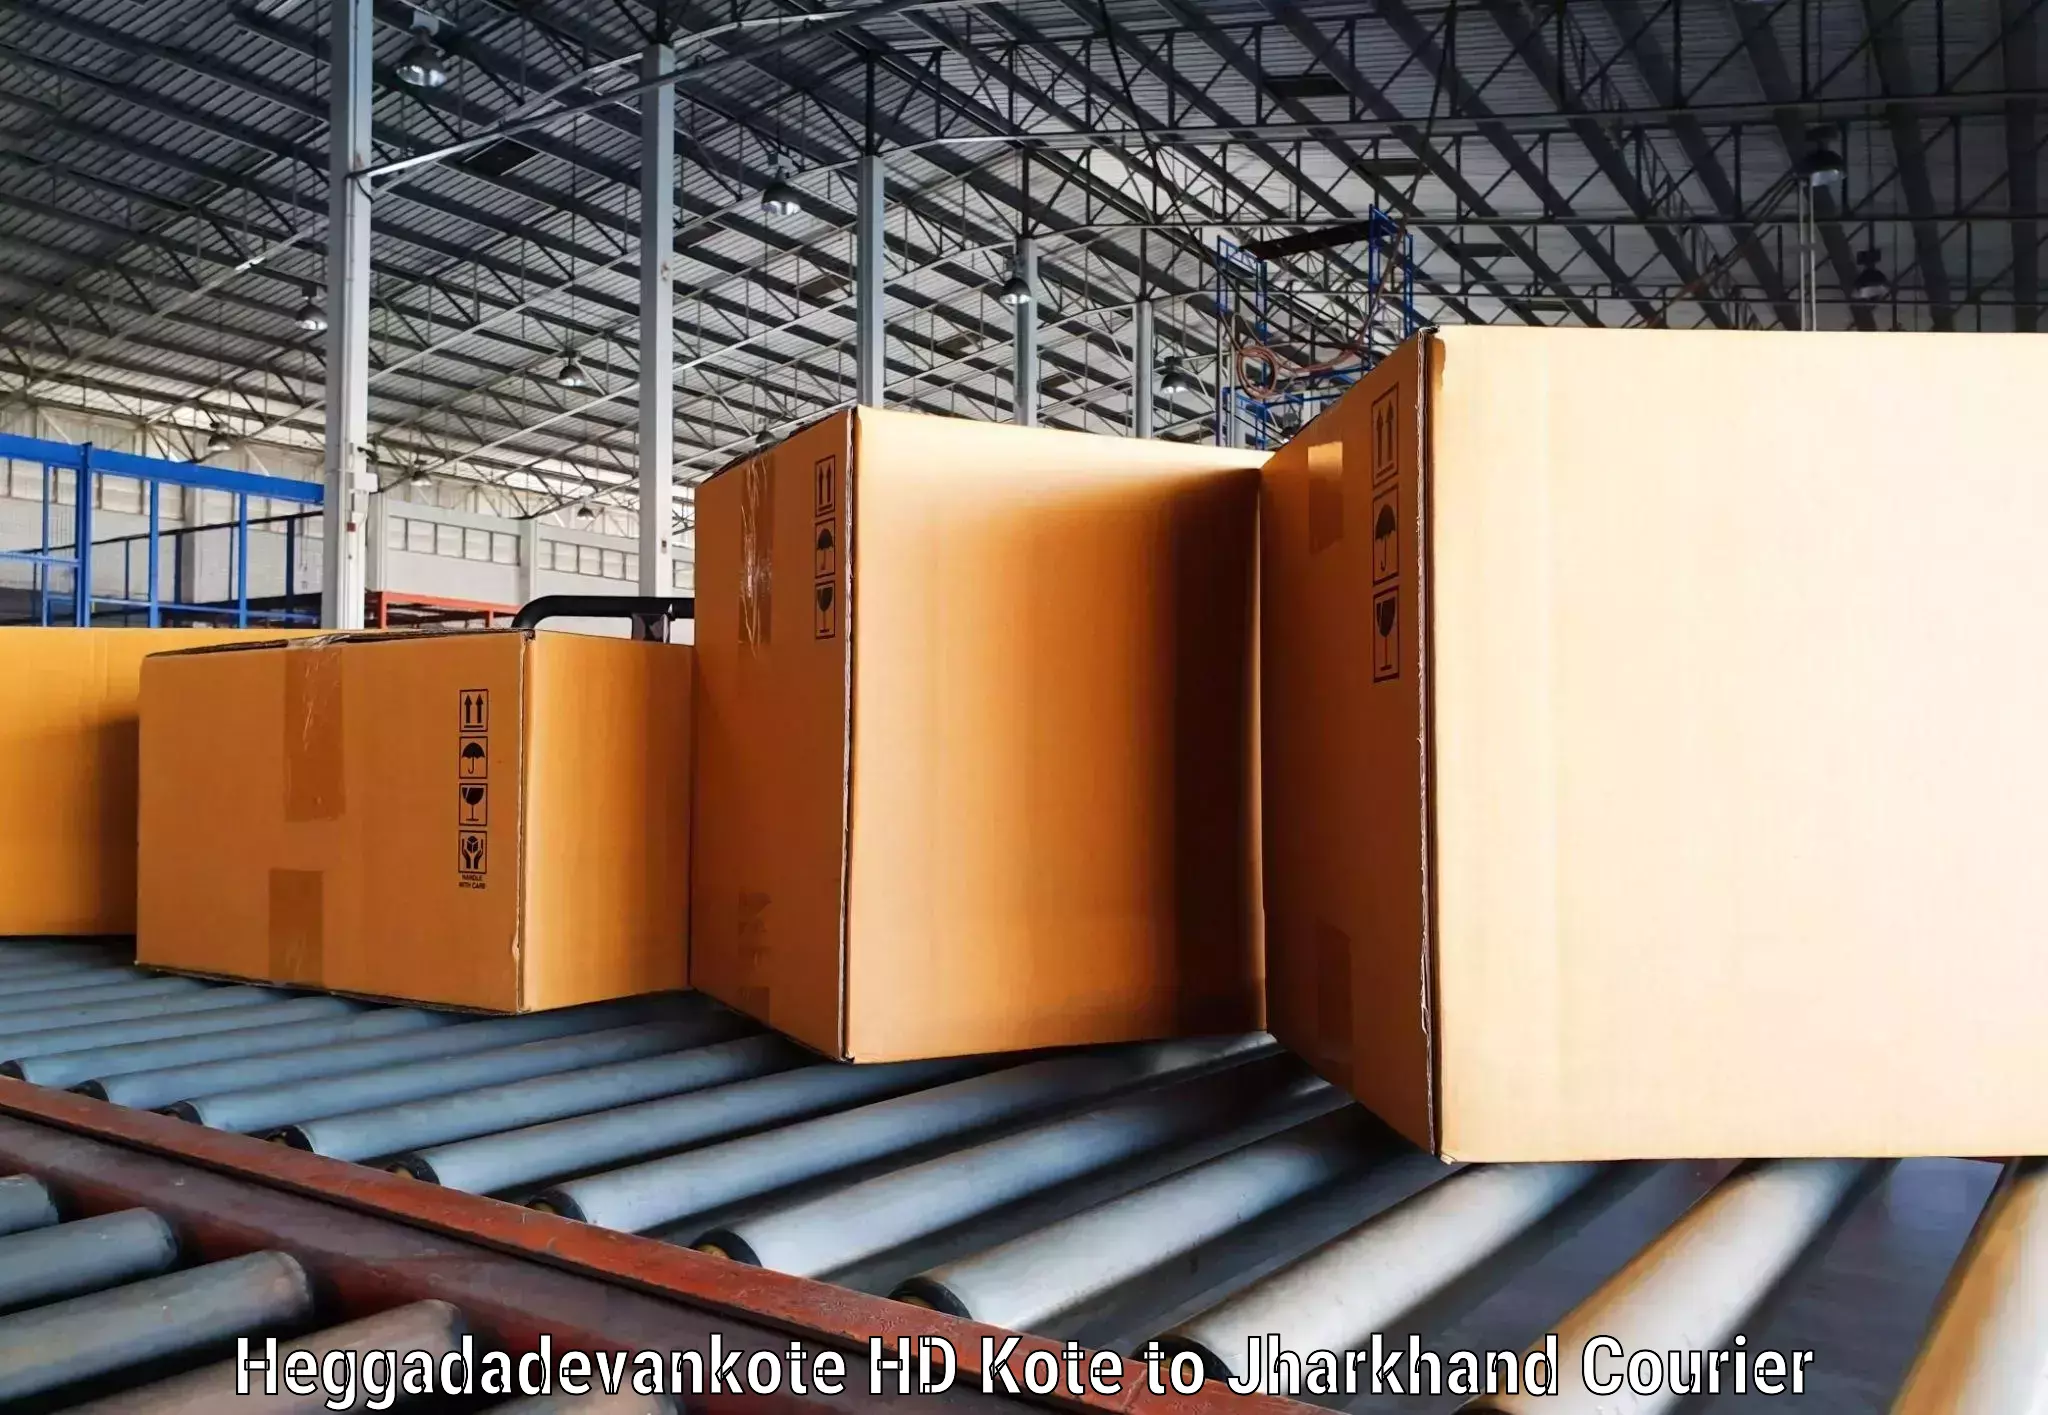 Efficient parcel transport in Heggadadevankote HD Kote to Dumka